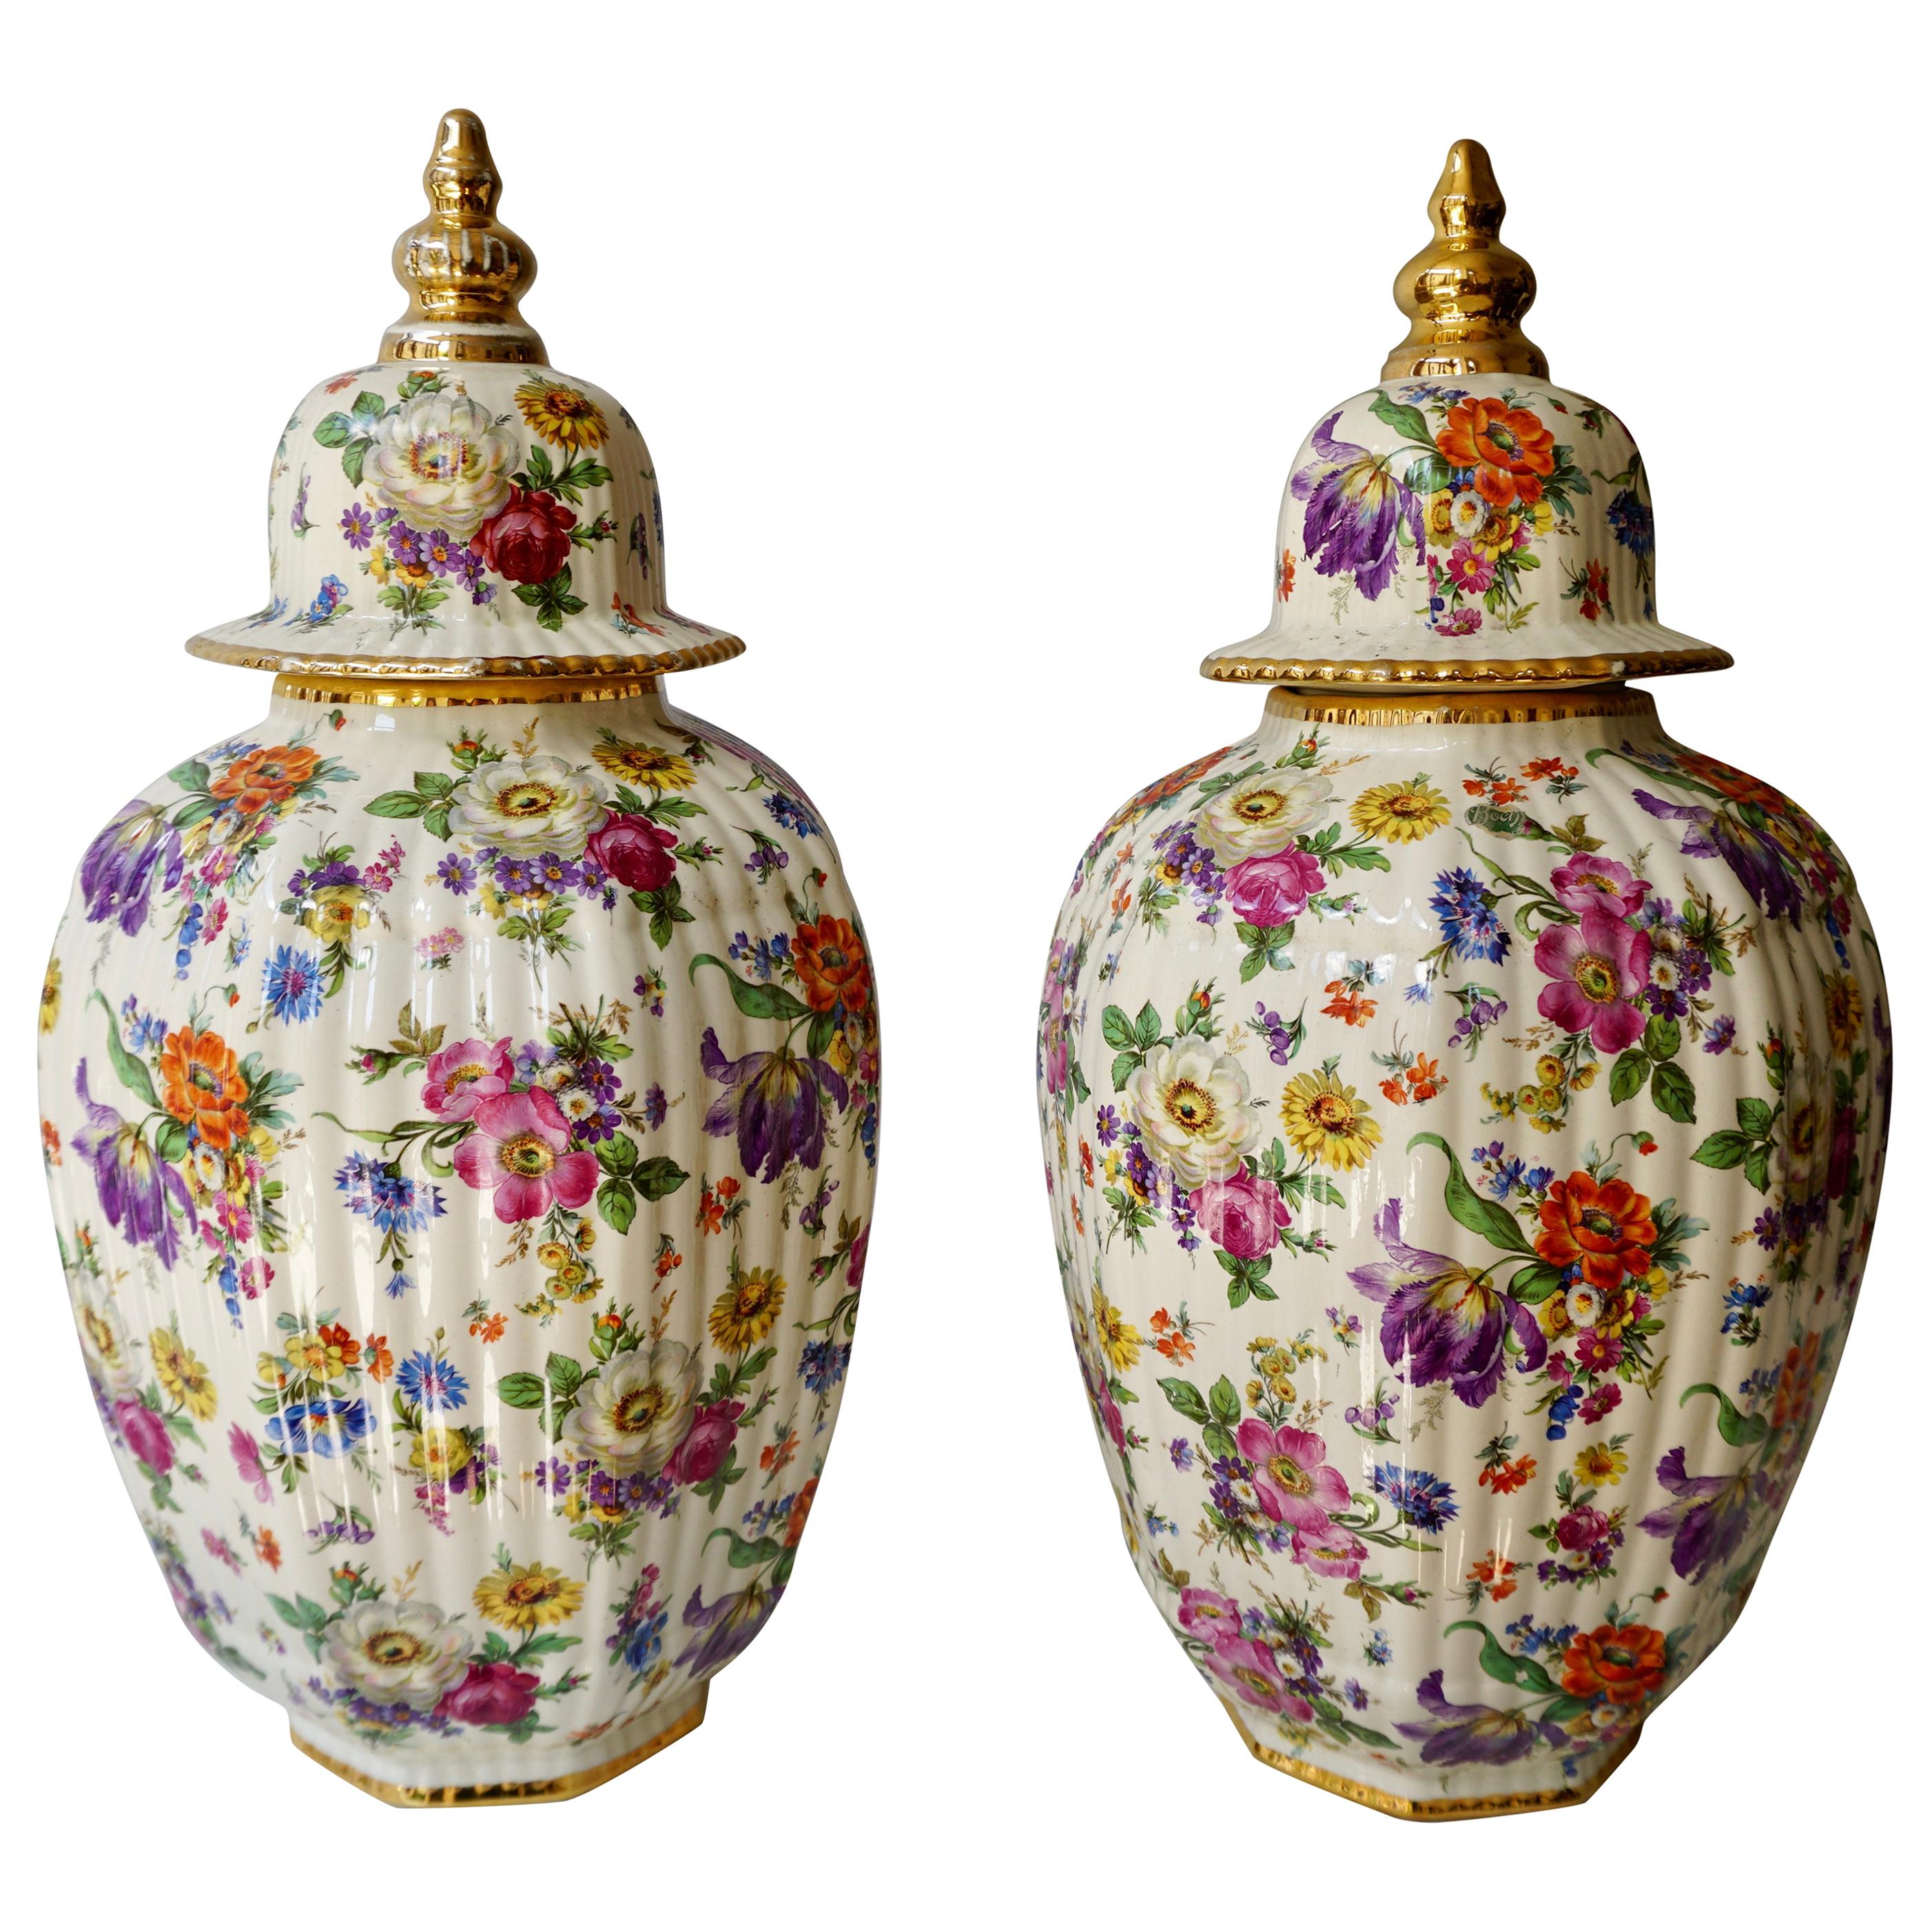 Boch Frères Vase with Stylized Floral Motifs